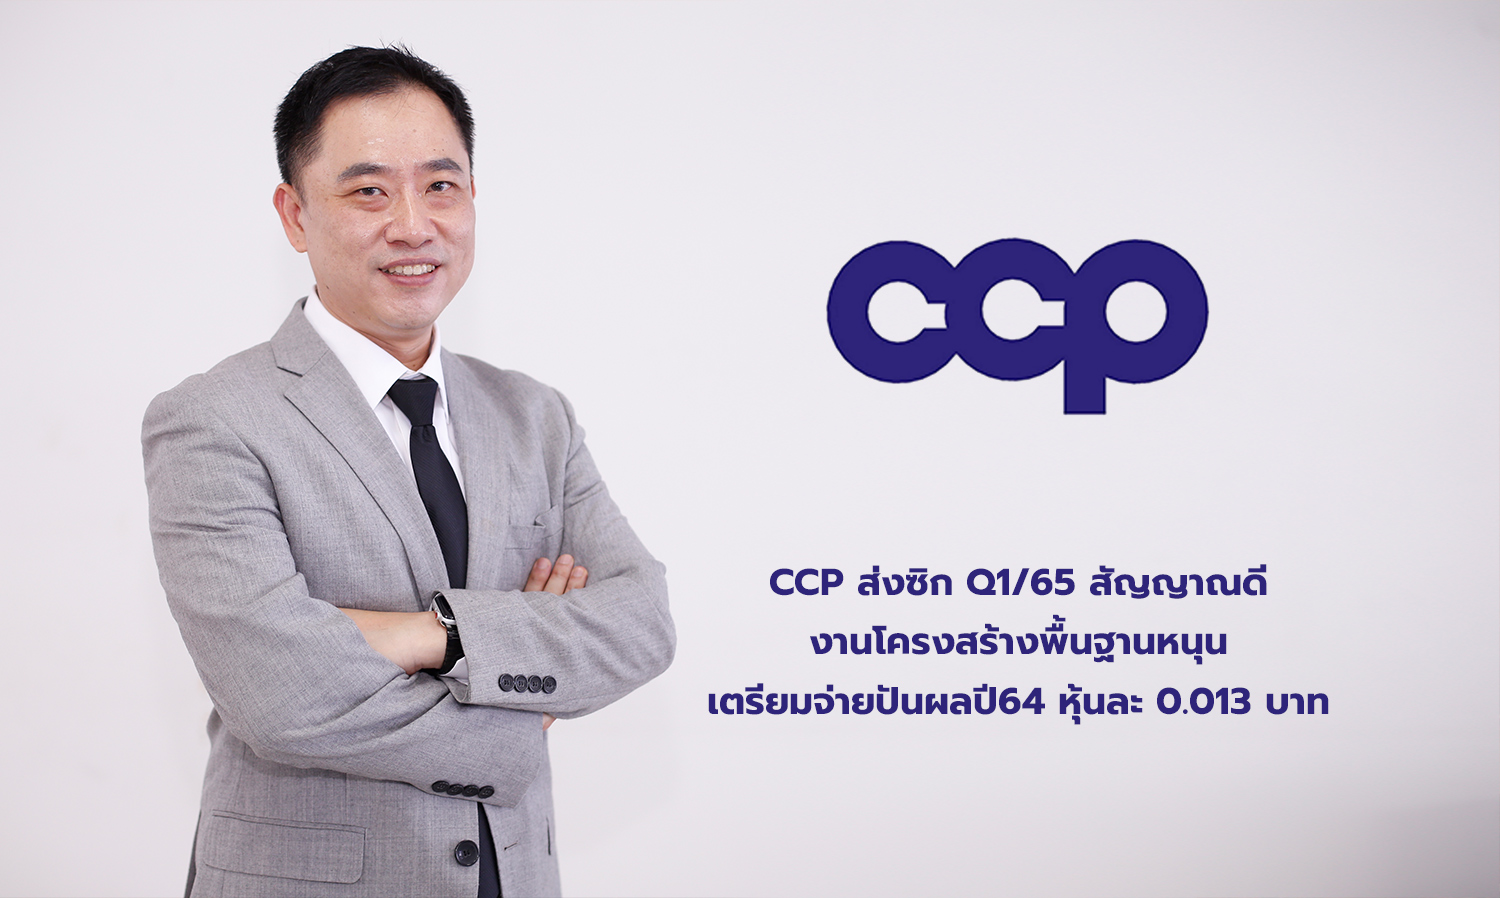 CCP ส่งซิก Q1/65 สัญญาณดี งานโครงสร้างพื้นฐานหนุน เตรียมจ่ายปันผลปี64 หุ้นละ 0.013 บาท